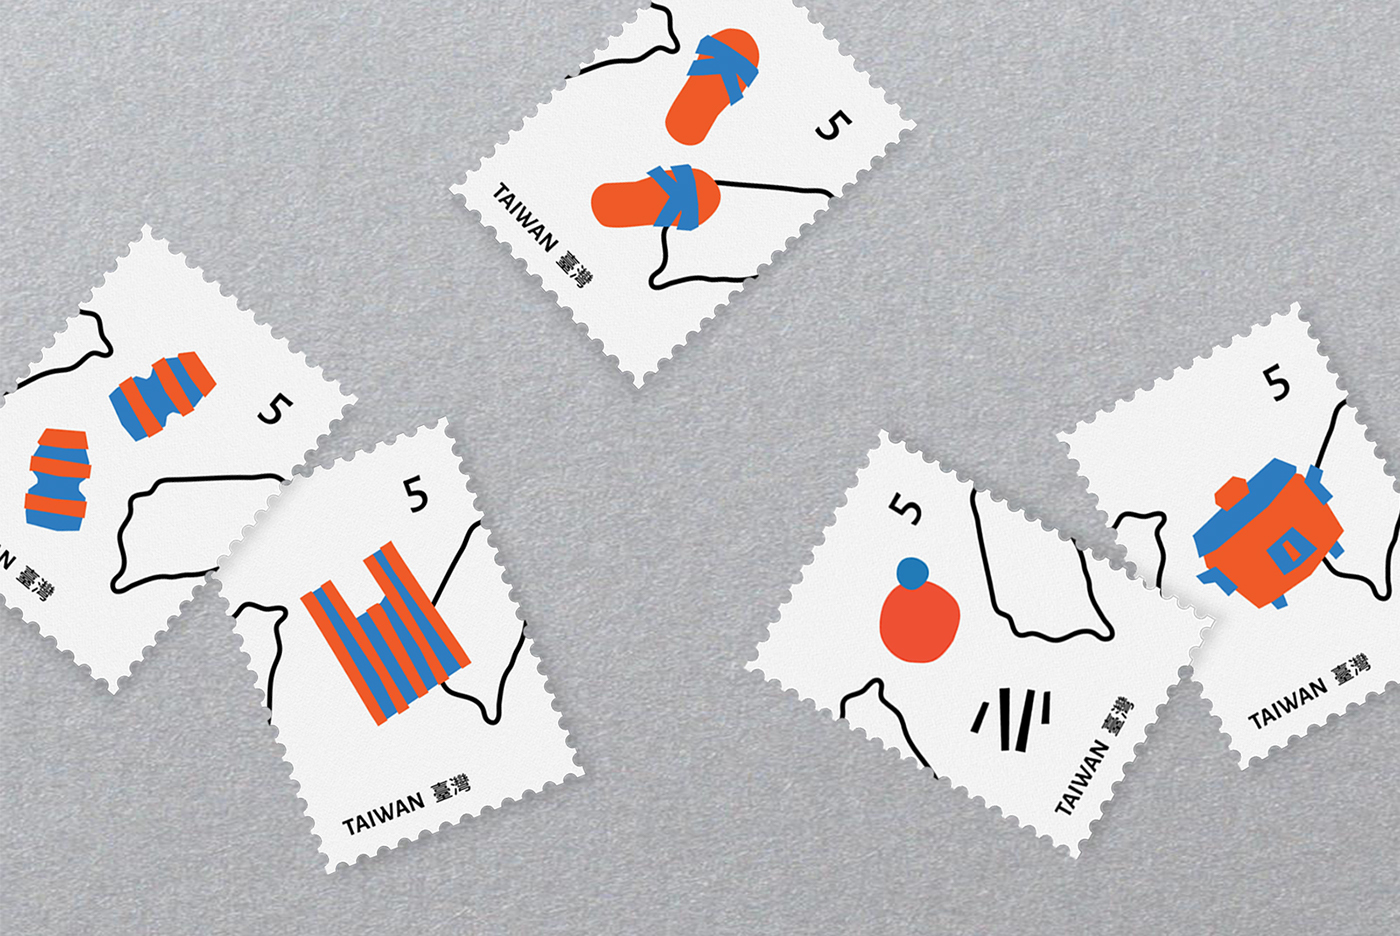 motiongraphic graphicdesign design VisualDesign Postage Stamp Design postage design stamps design poster artdesign photographics